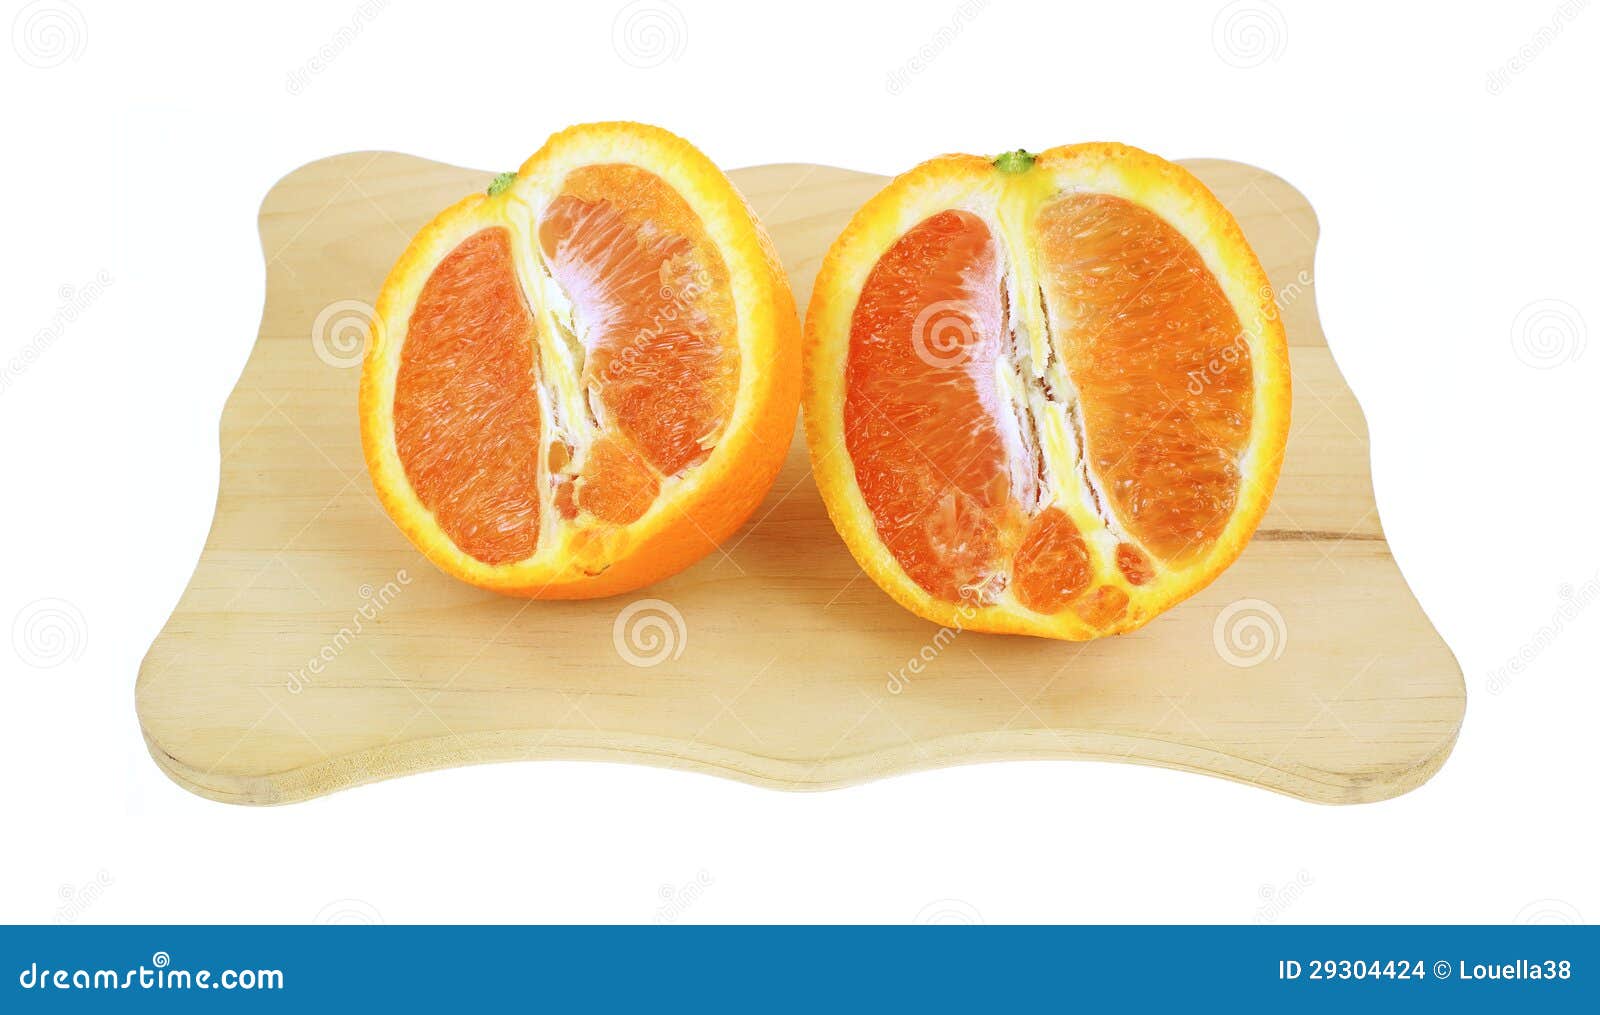 cara cara navel orange sliced